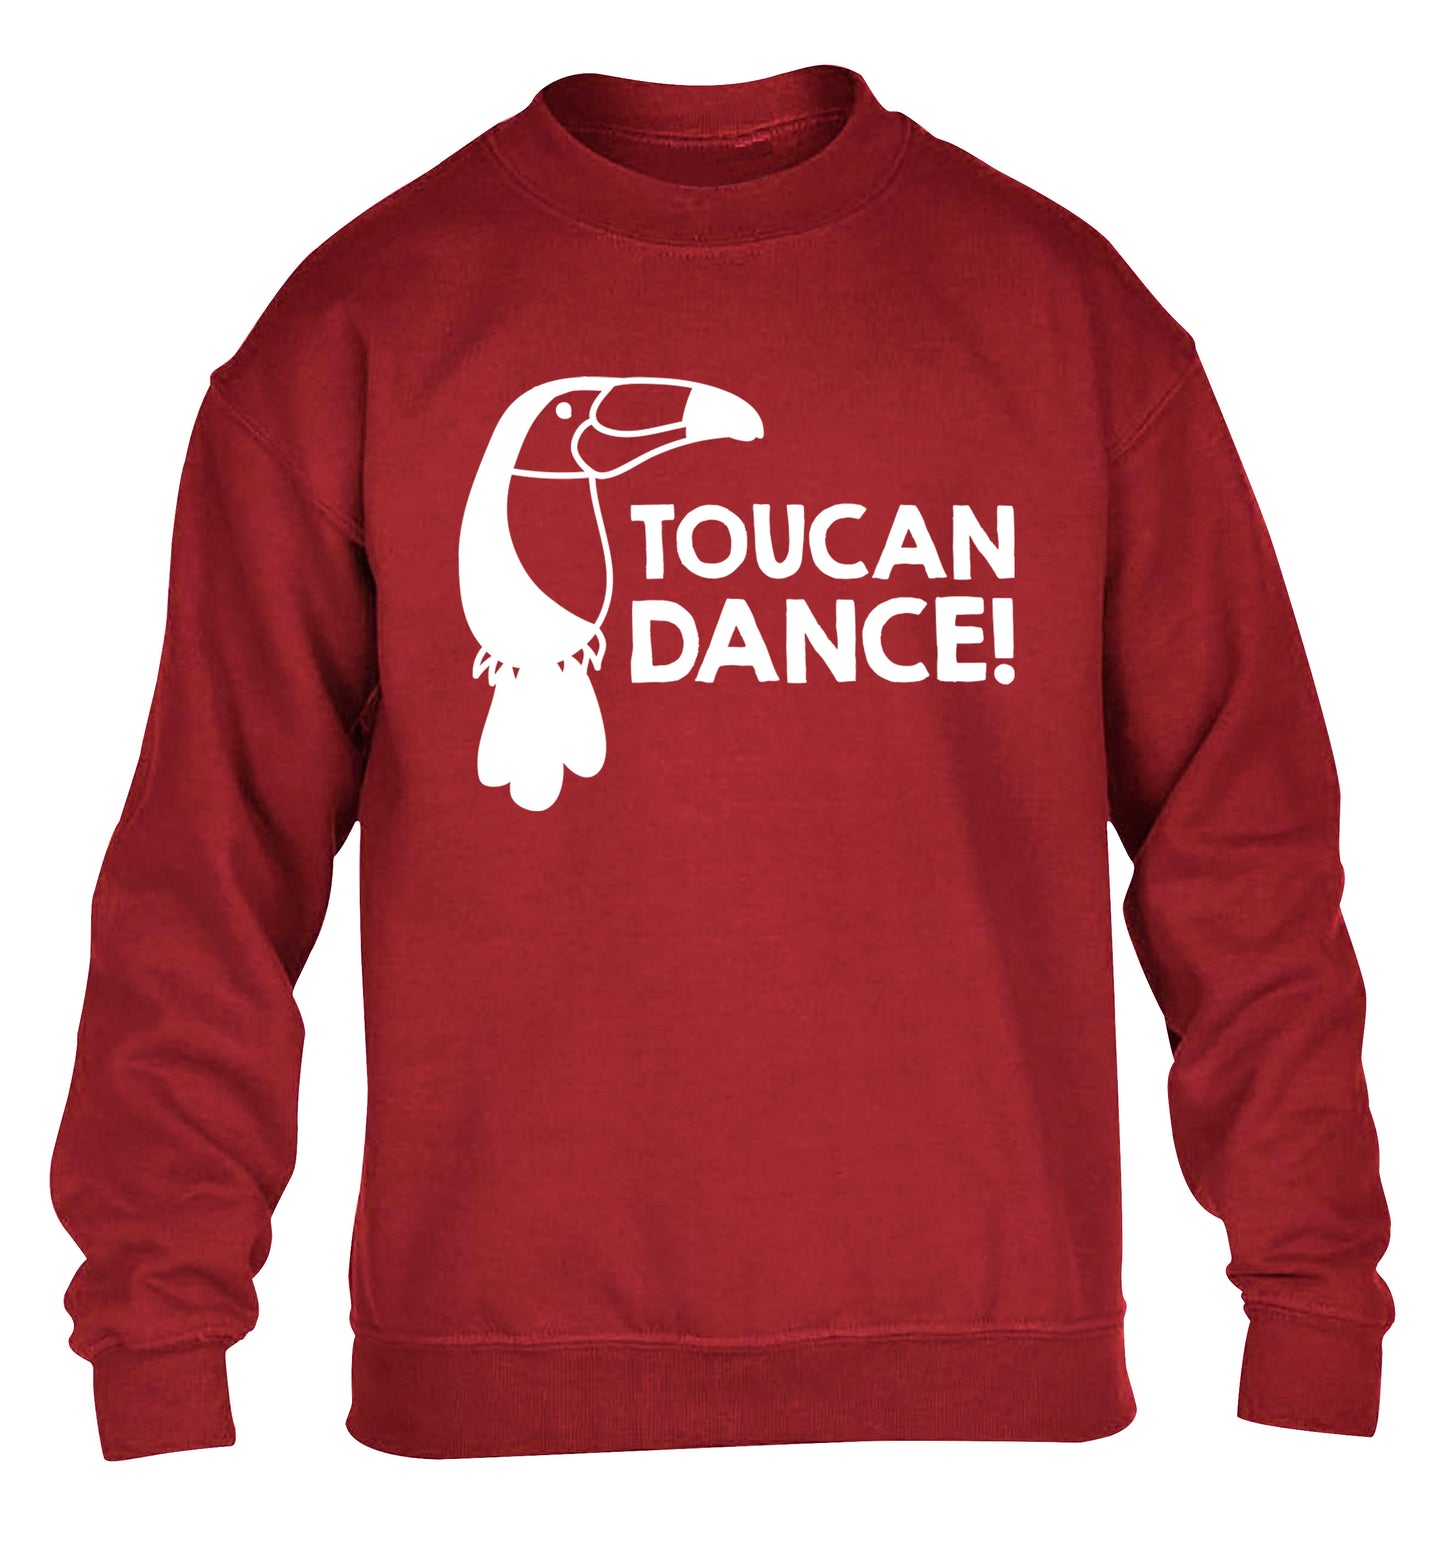 Toucan dance children's grey sweater 12-13 Years